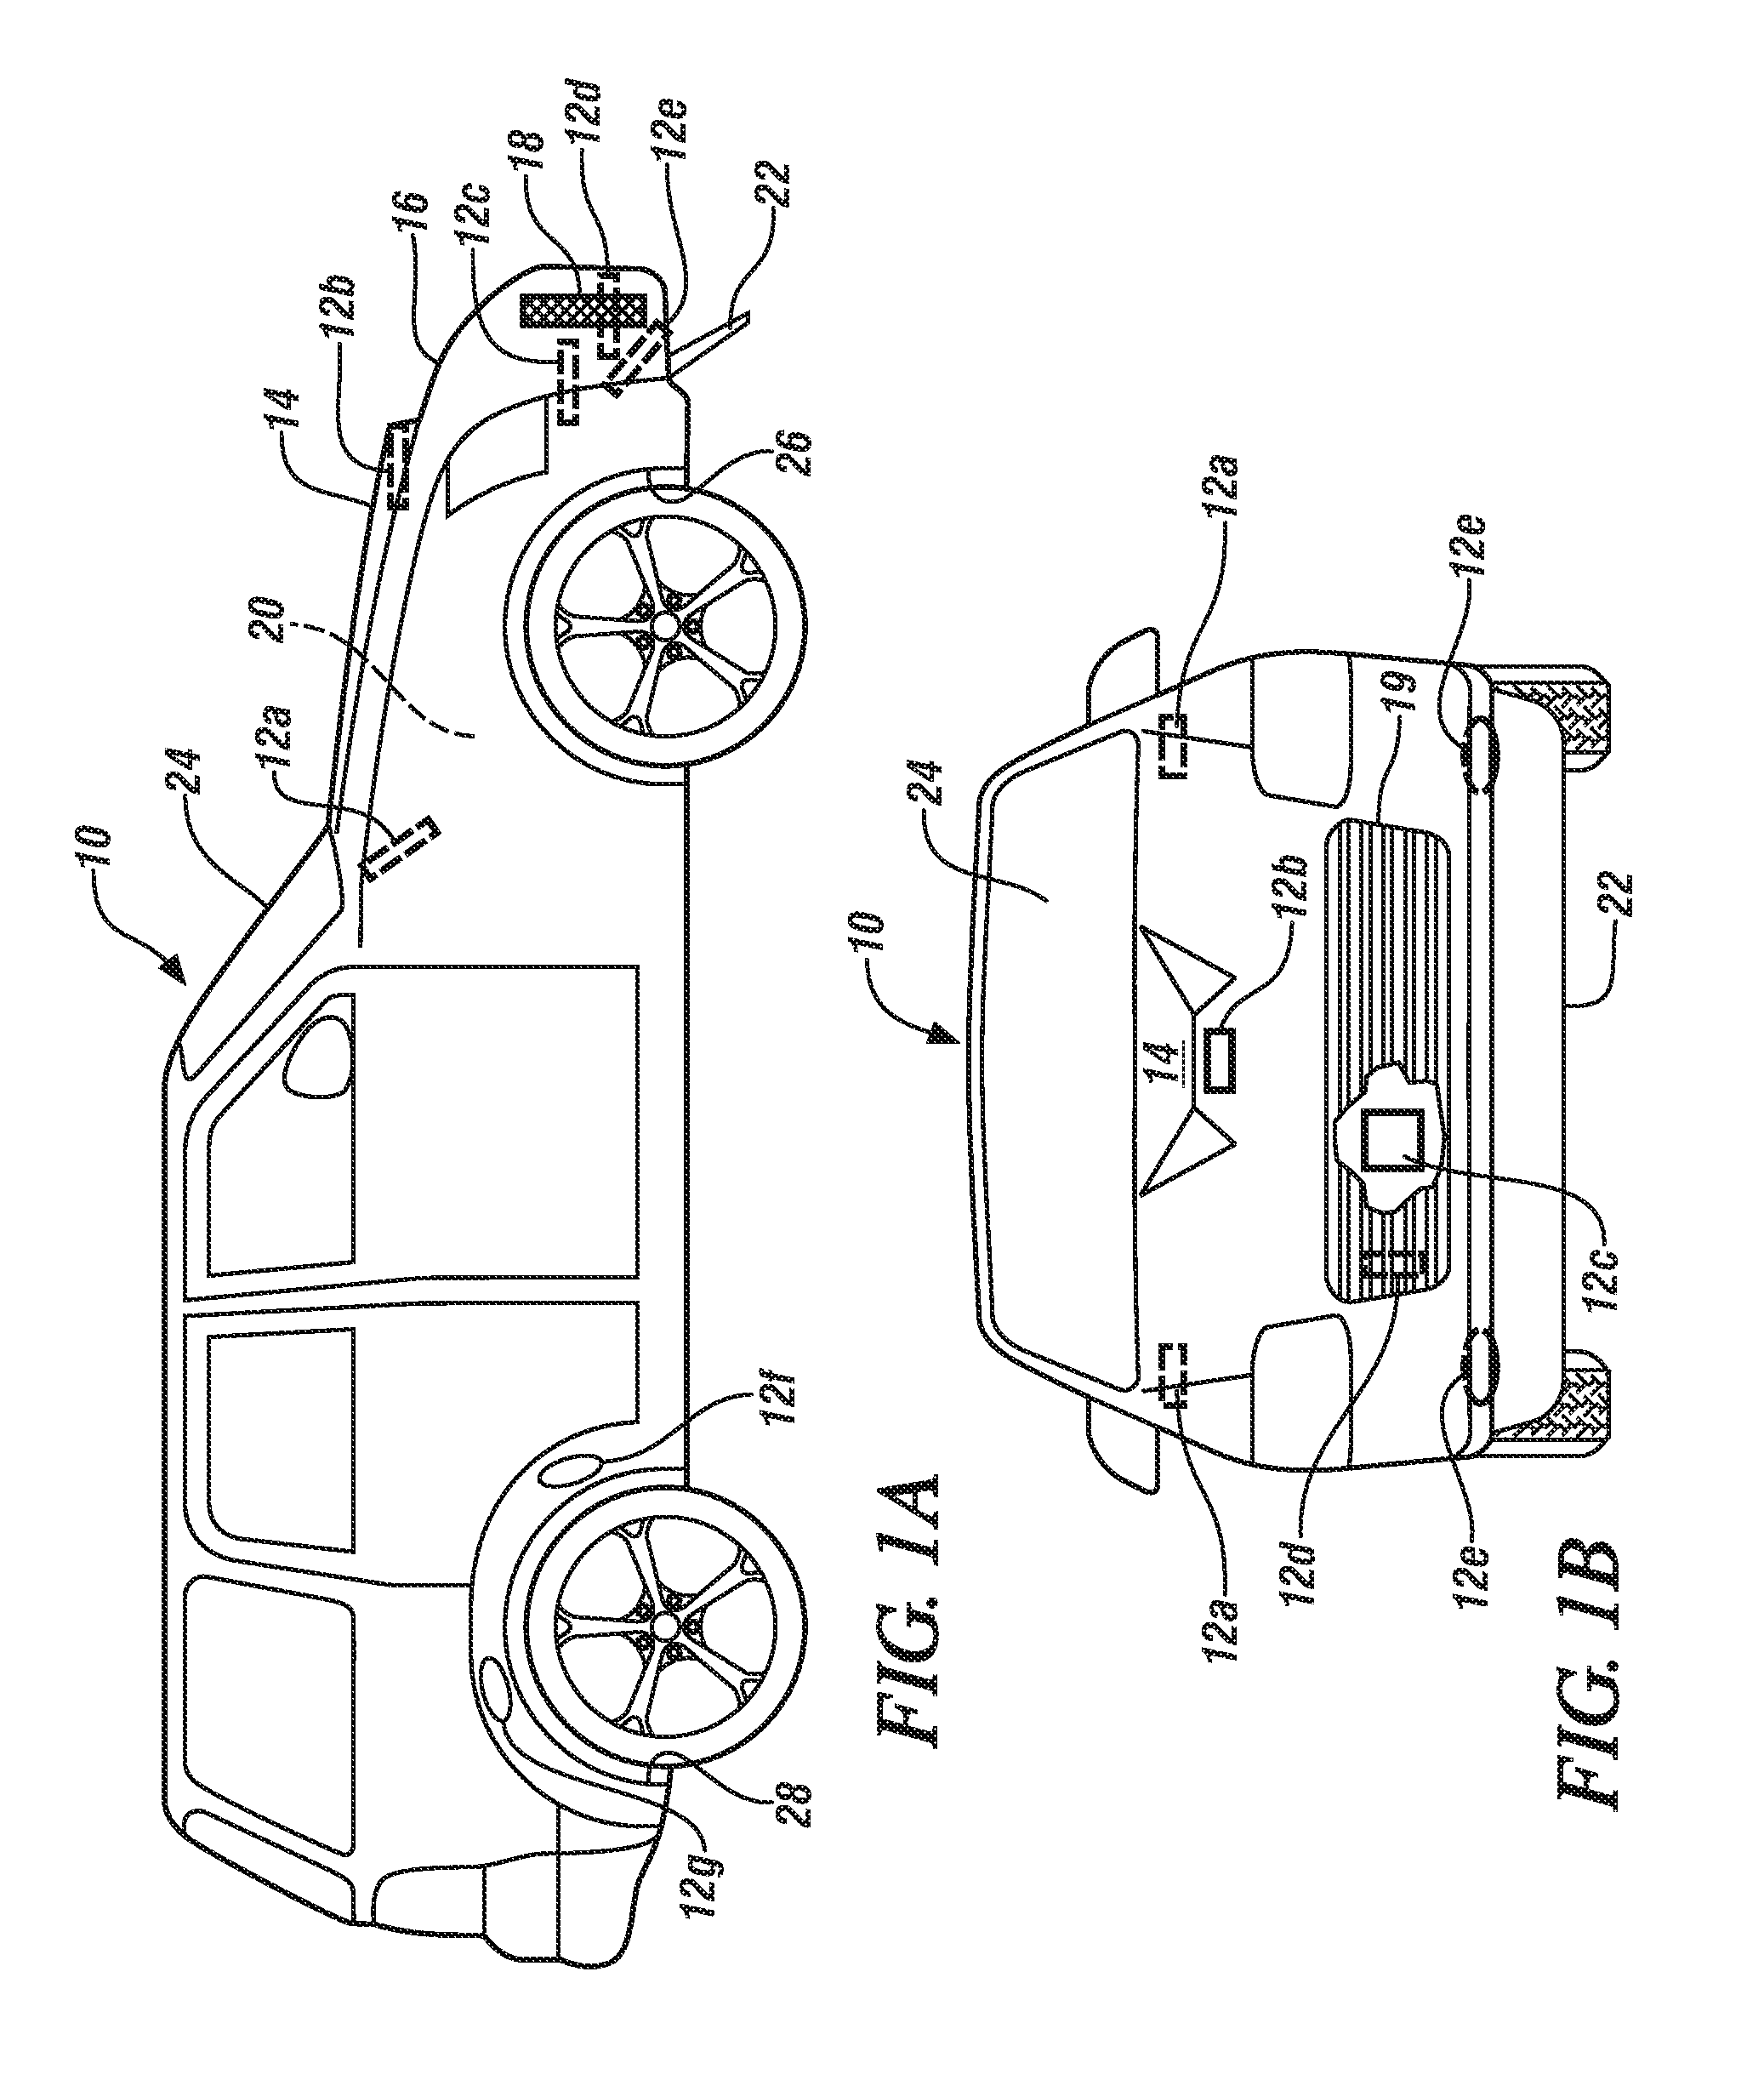 Powered vehicle brake cooling system